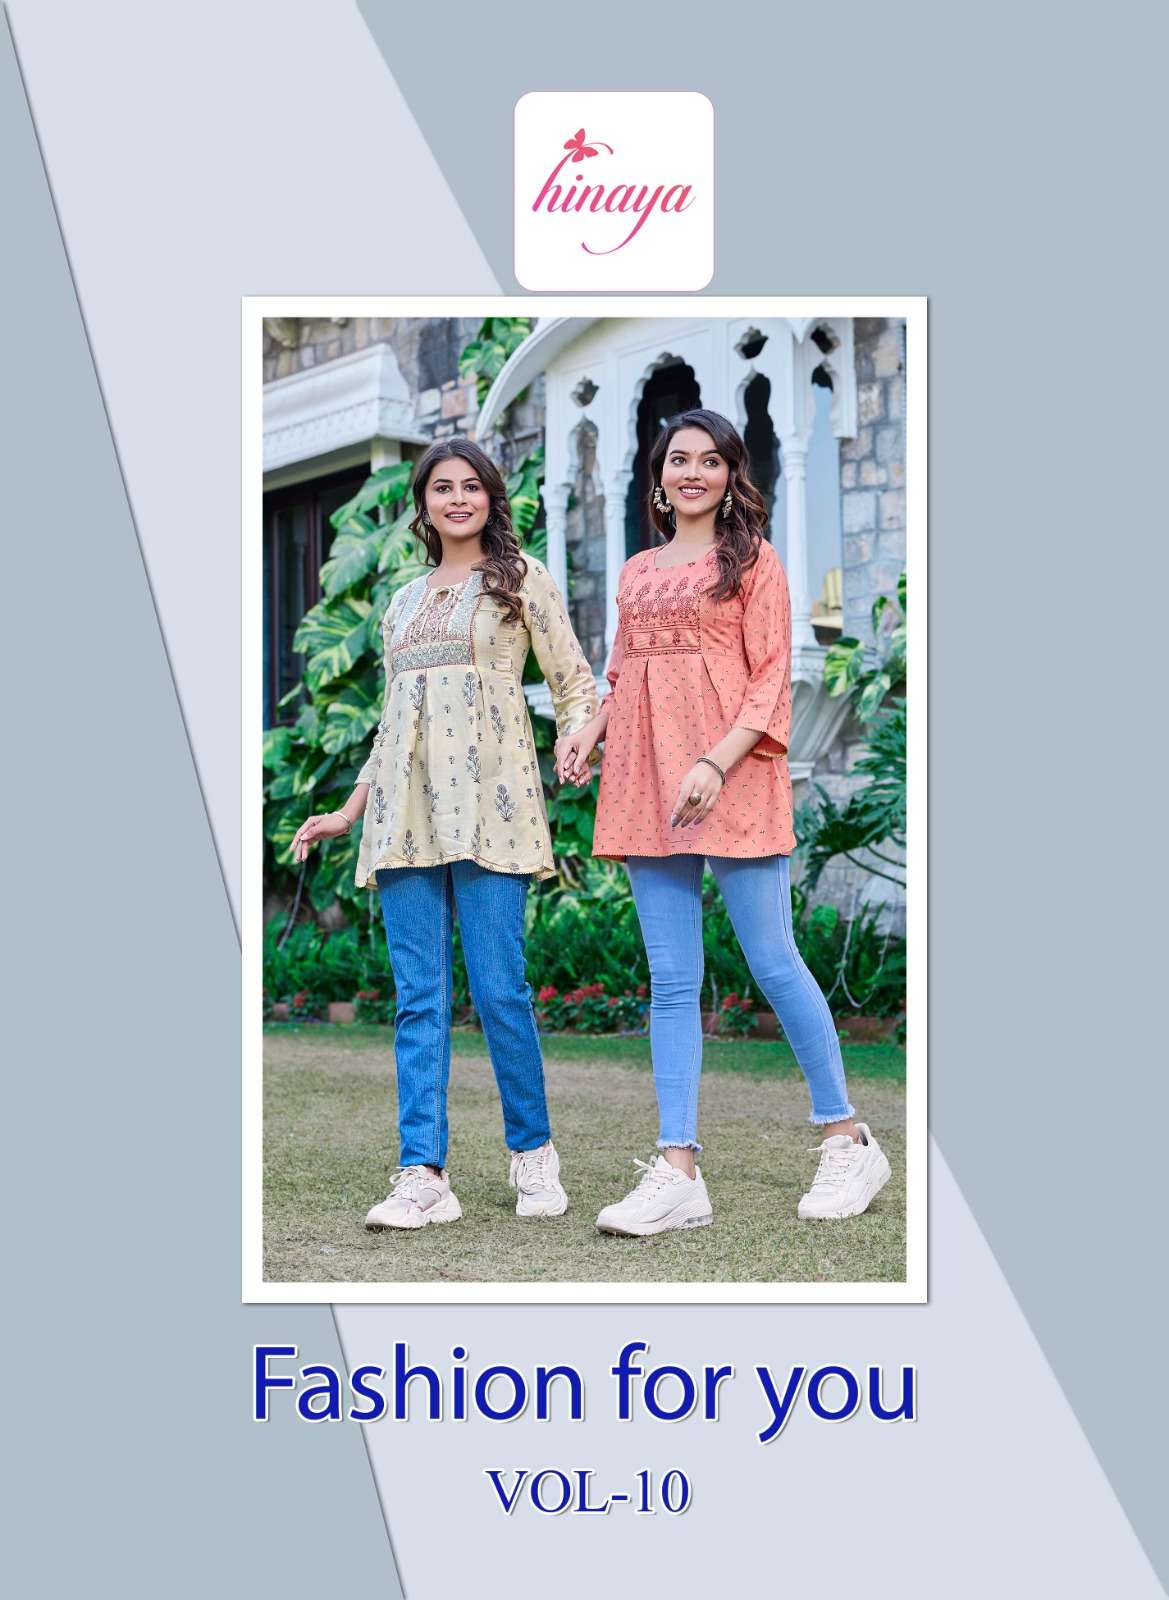 hinaya fashion for you vol-10 10001-10008 series trendy western rayon short tops catalogue wholesaler surat gujrat 